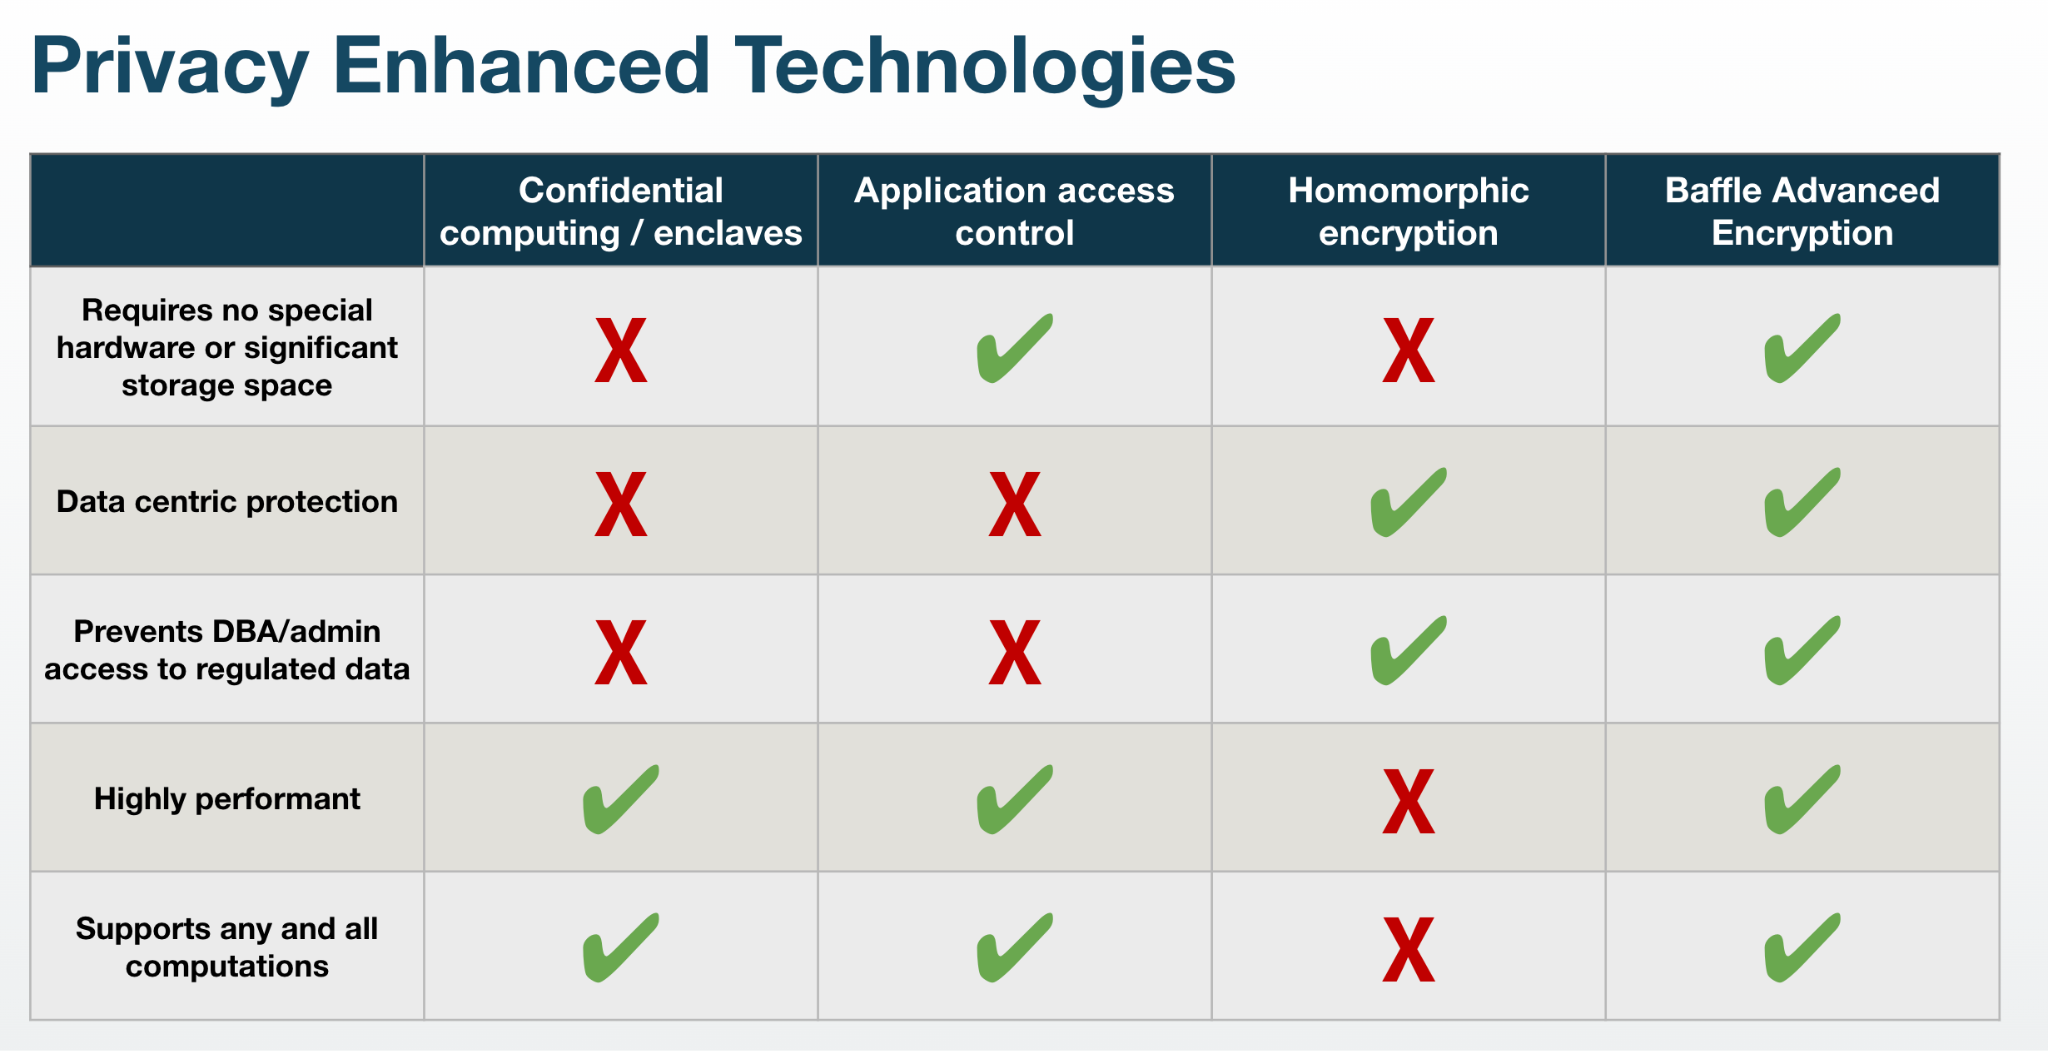 Privacy Enhanced Computation Technologies Advantages and Disadvantages – Source: securityboulevard.com